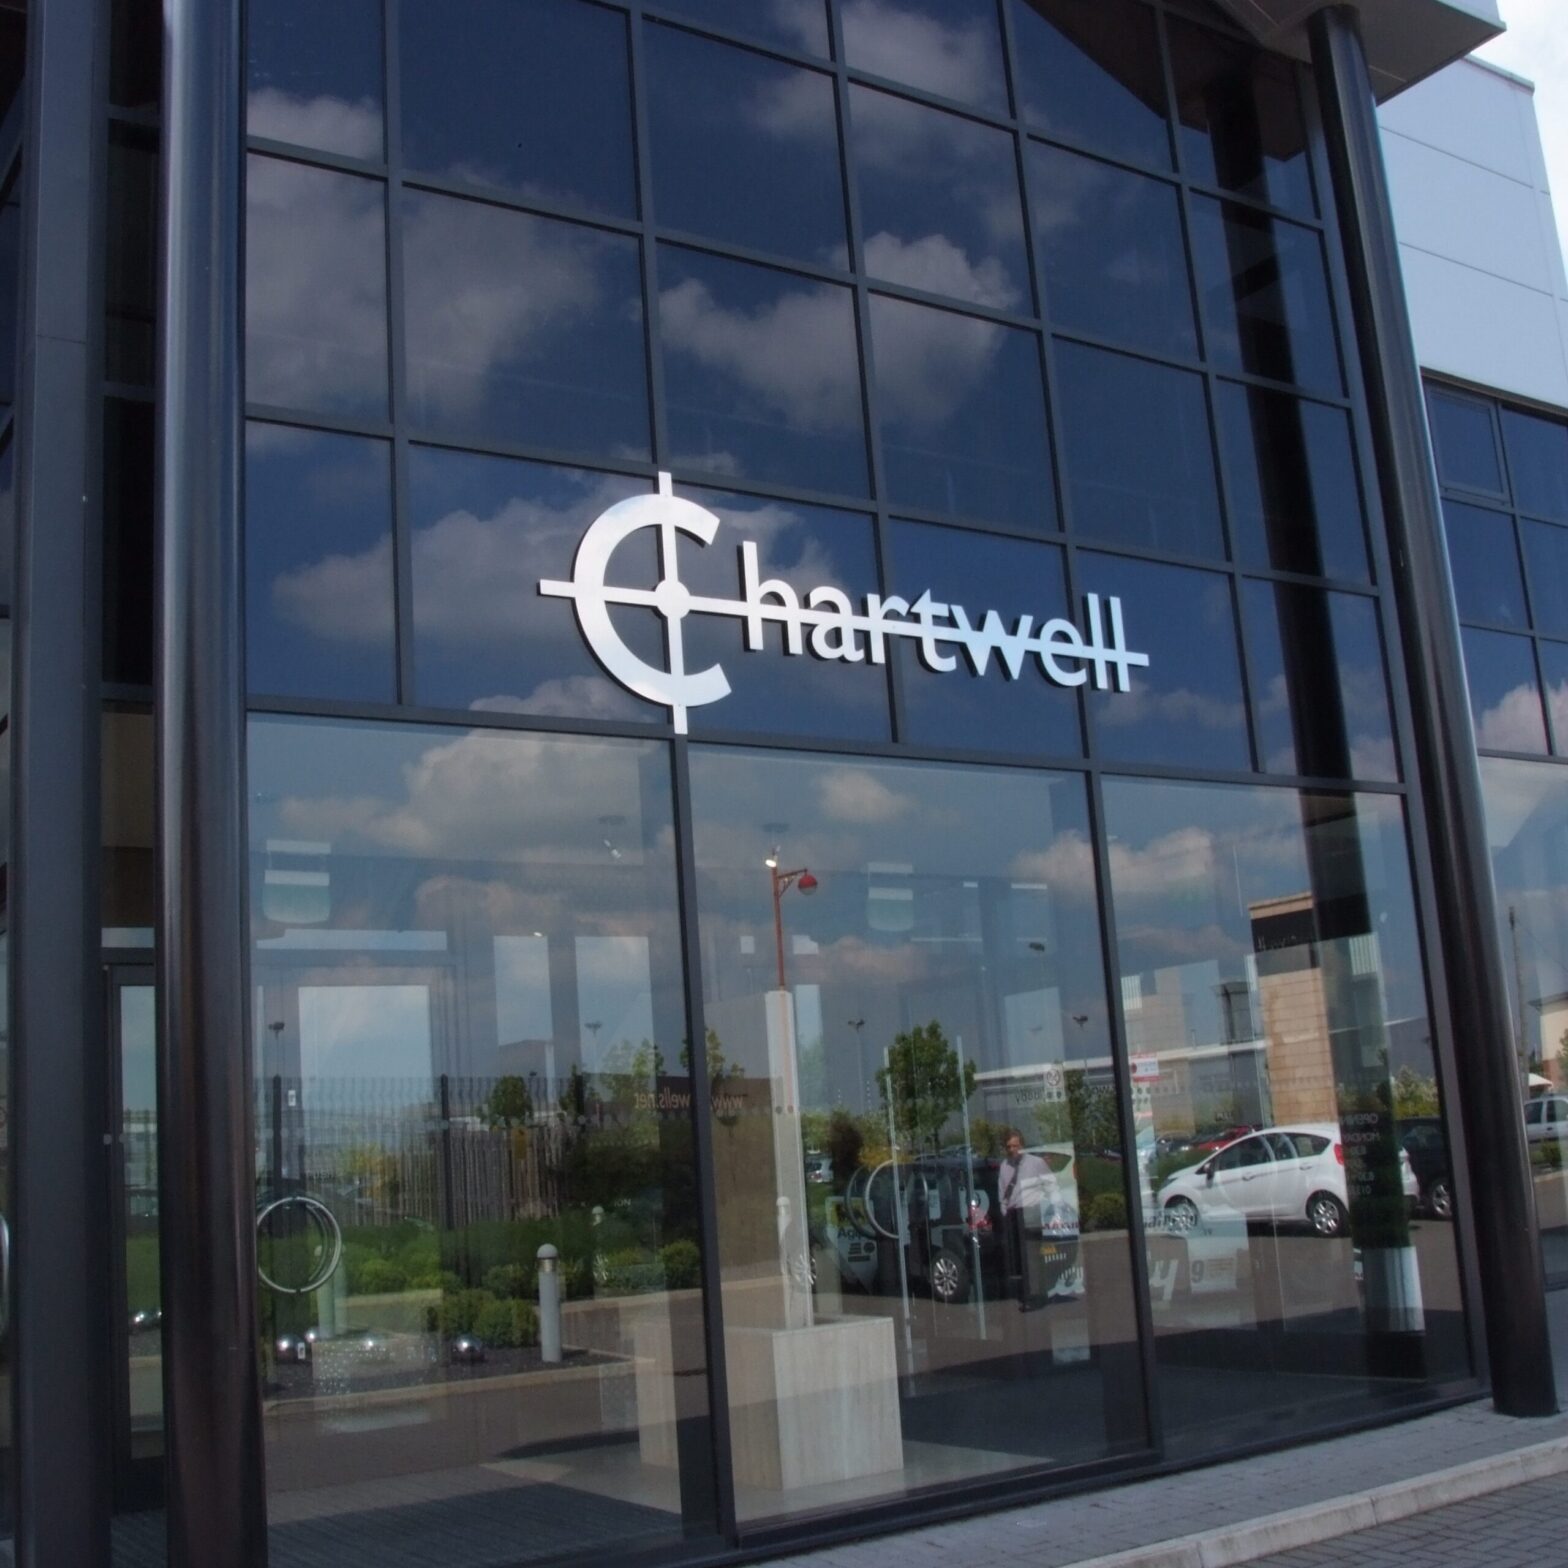 Tamlite Chartwell Prestige Accident Repair case study building exterior image